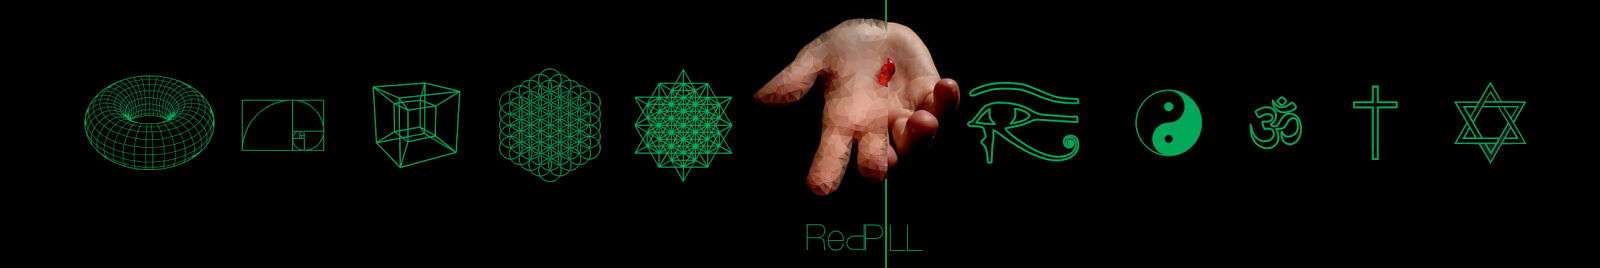 RedPill